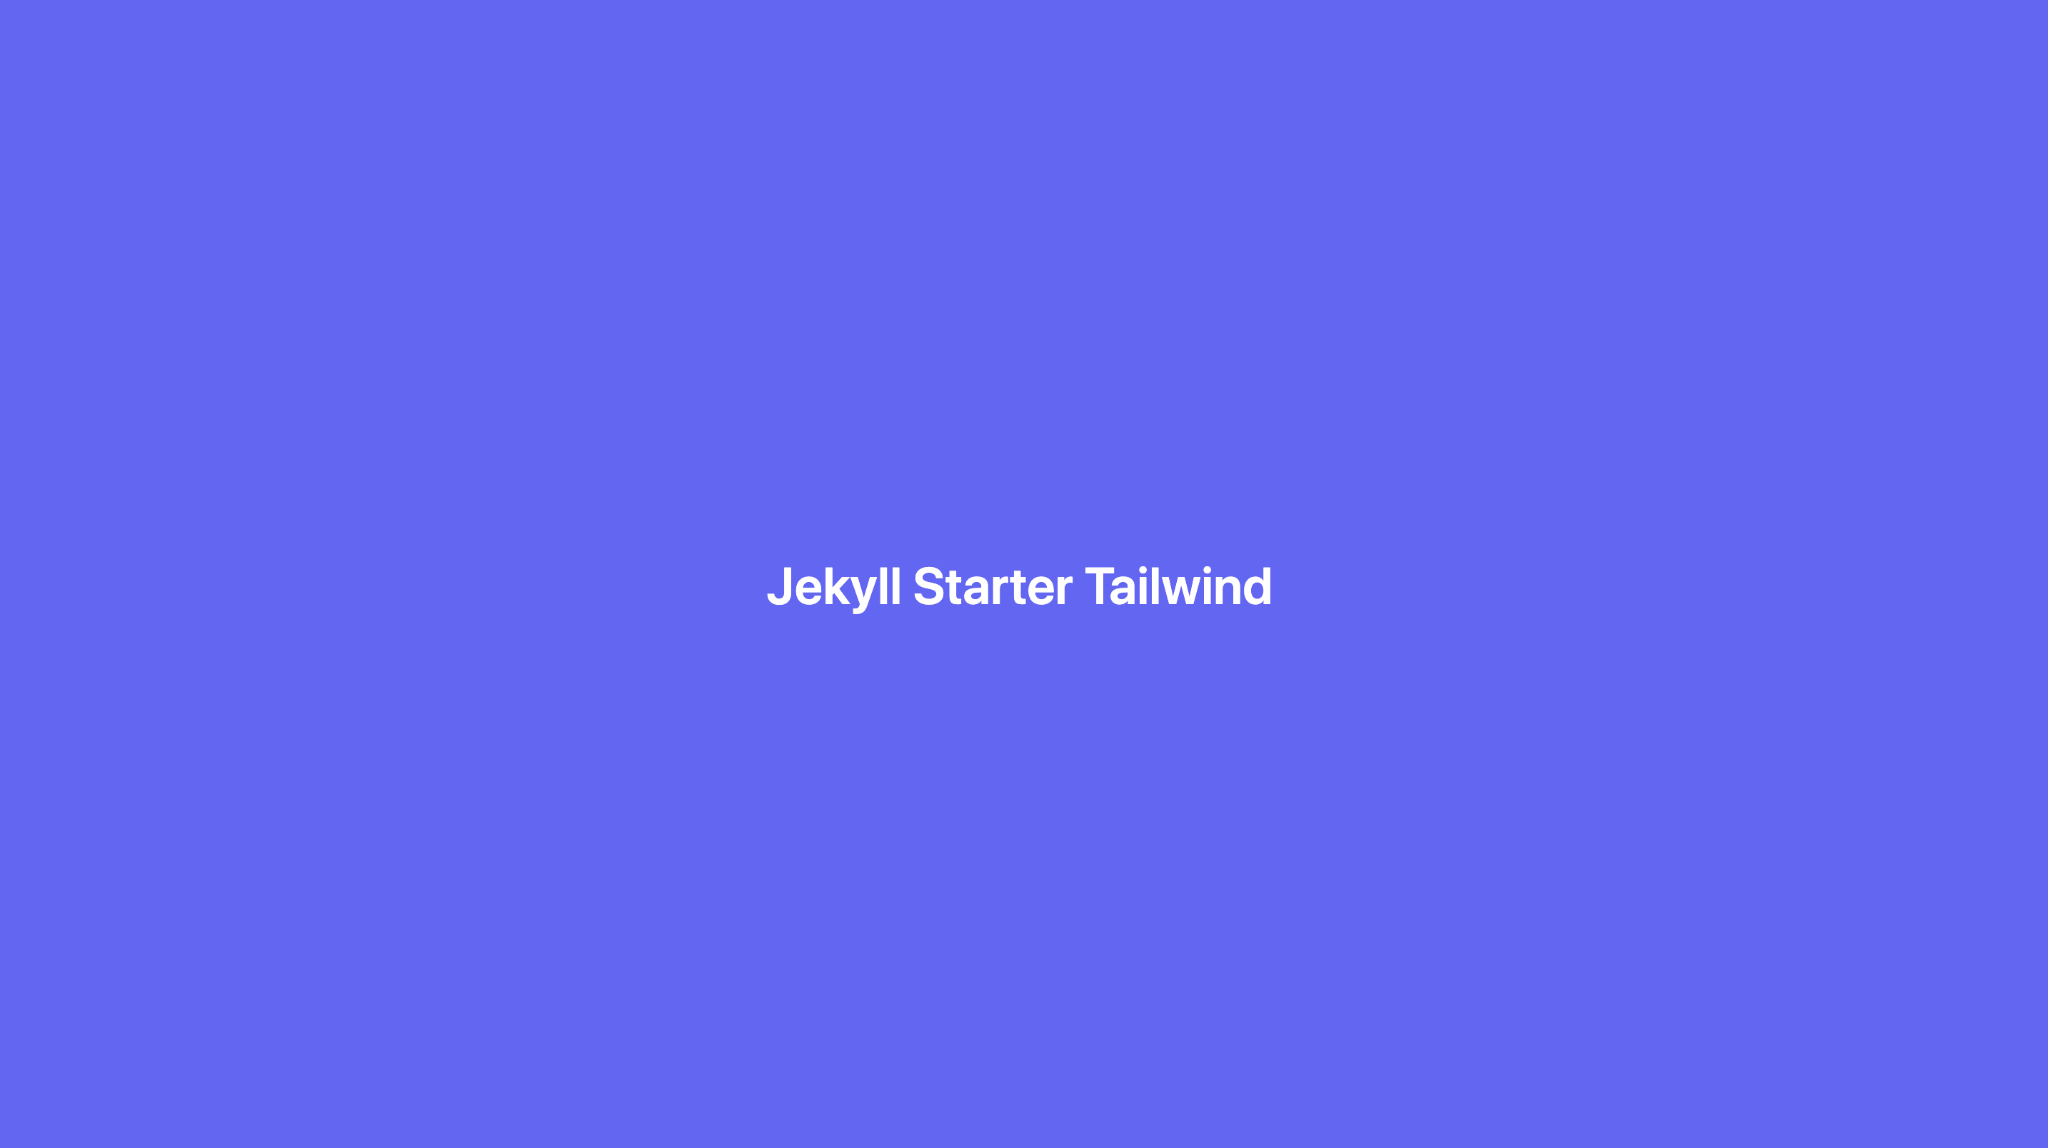 The “Jekyll Starter Tailwind” Page